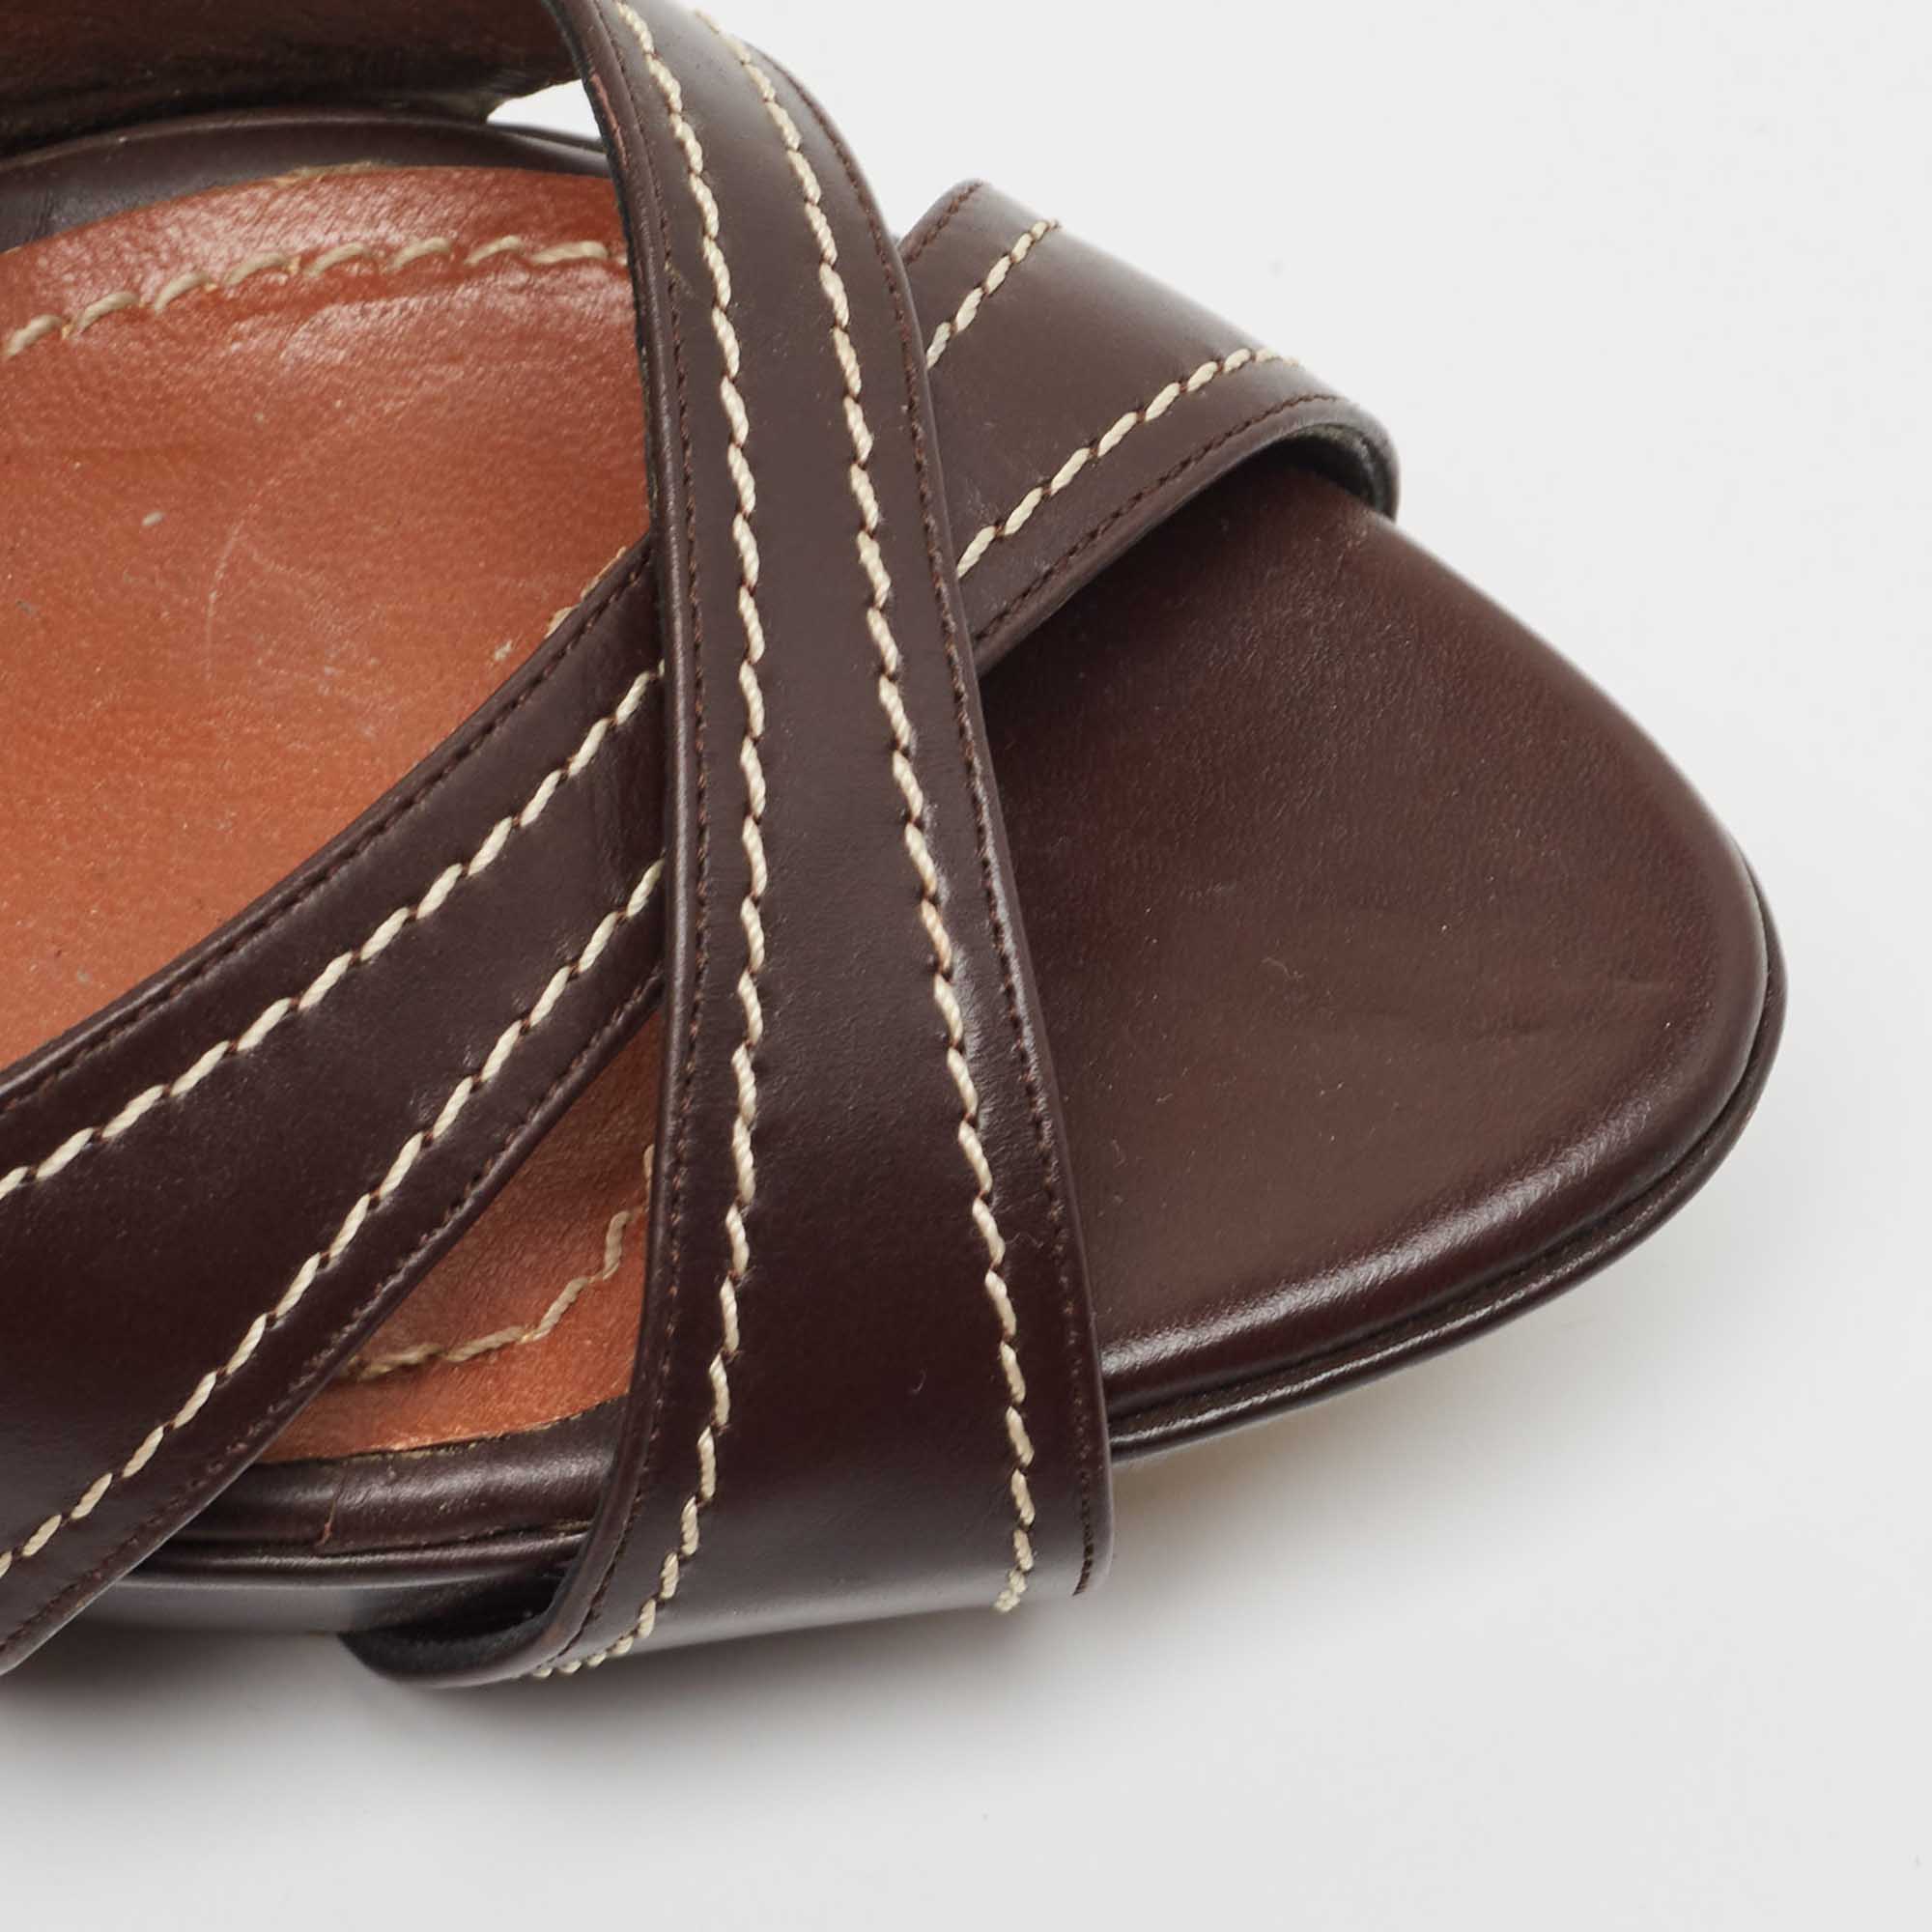 CH Carolina Herrera Brown Leather Strappy Sandals Size 37